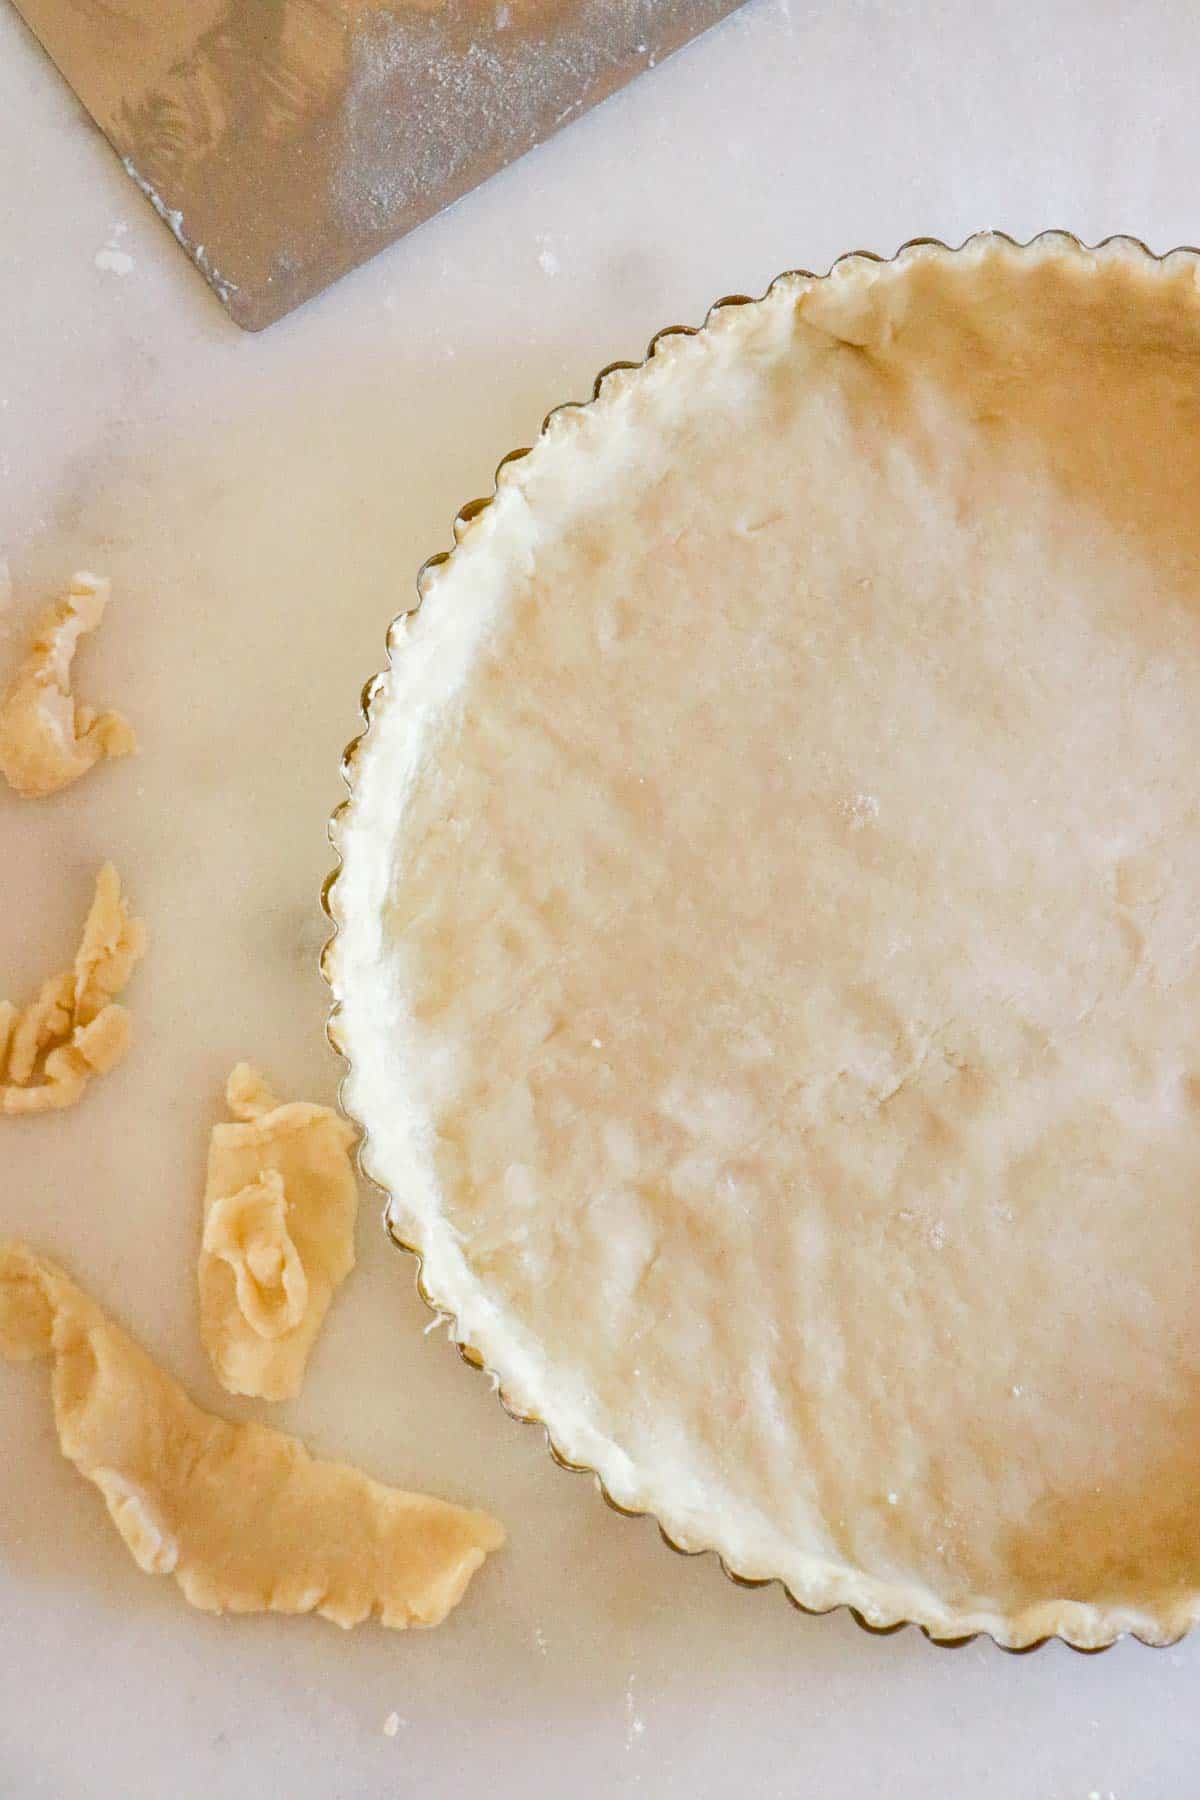 Unbaked pie dough in a tart pan next to scraps of dough.